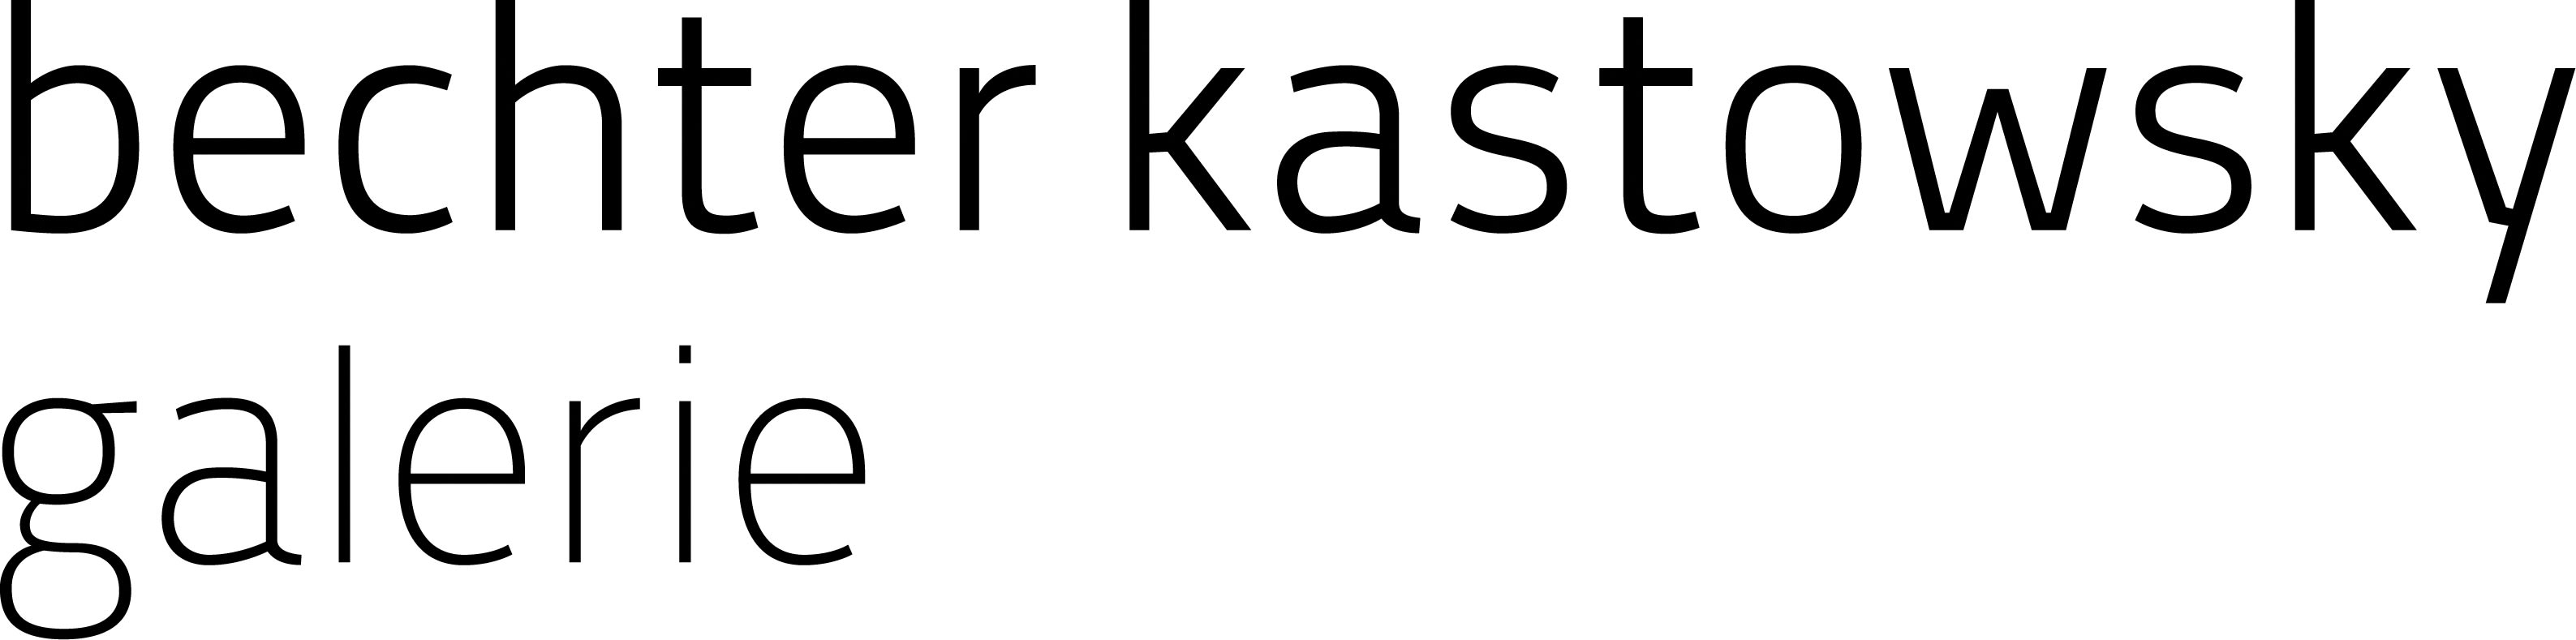 Bechter Kastowsky Galerie company logo